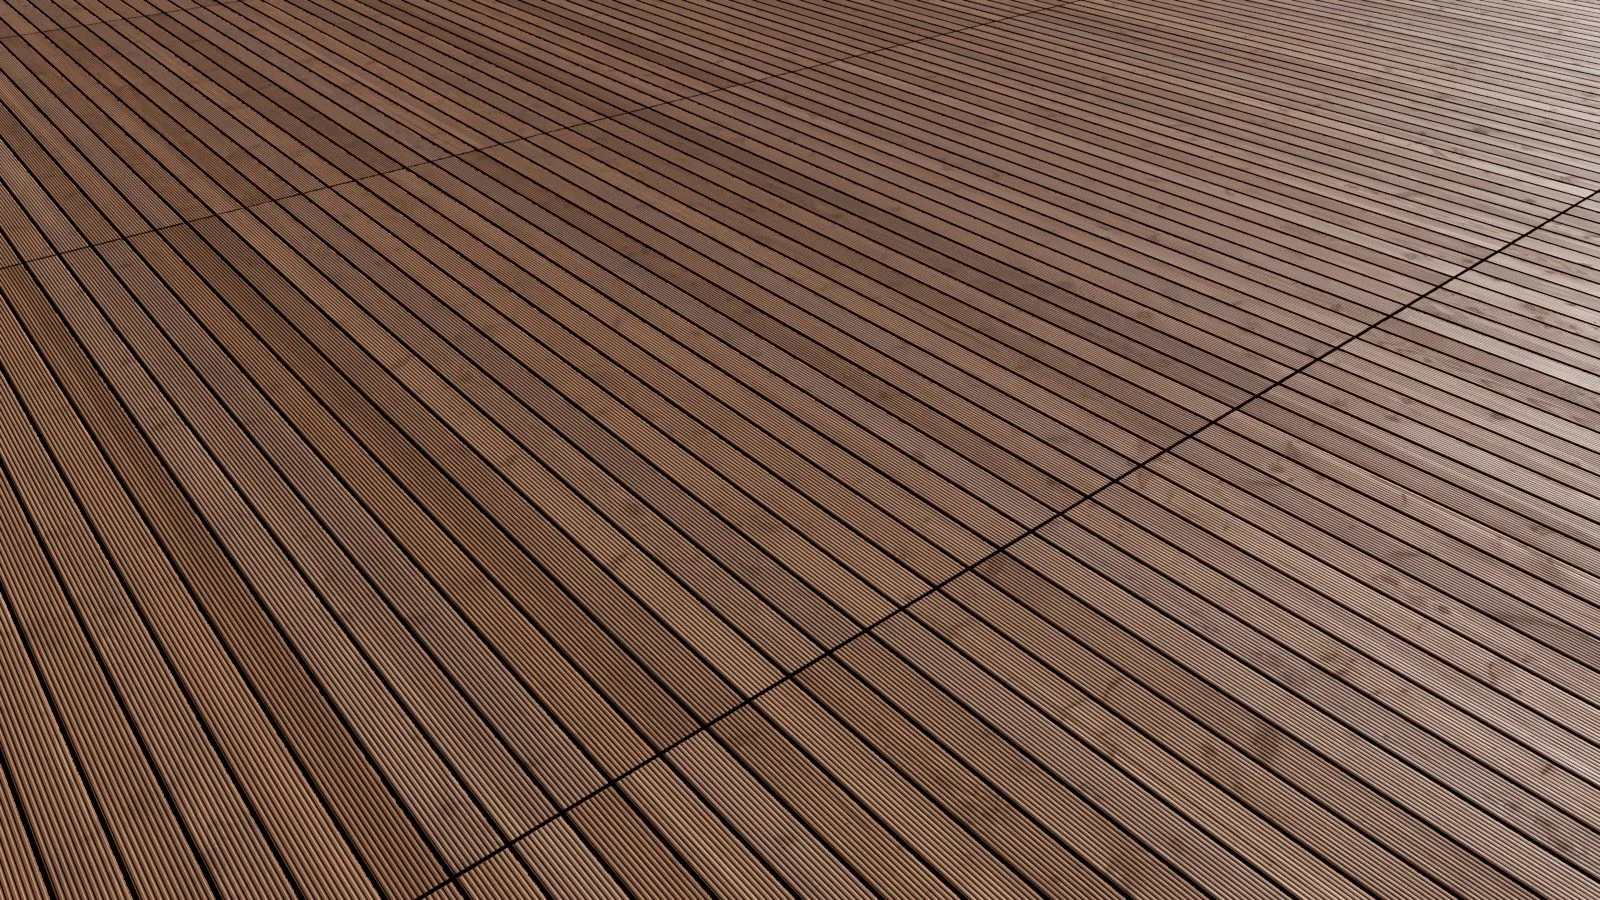 Woodfloors vol03 Terrace 8K Seamless PBR Materials